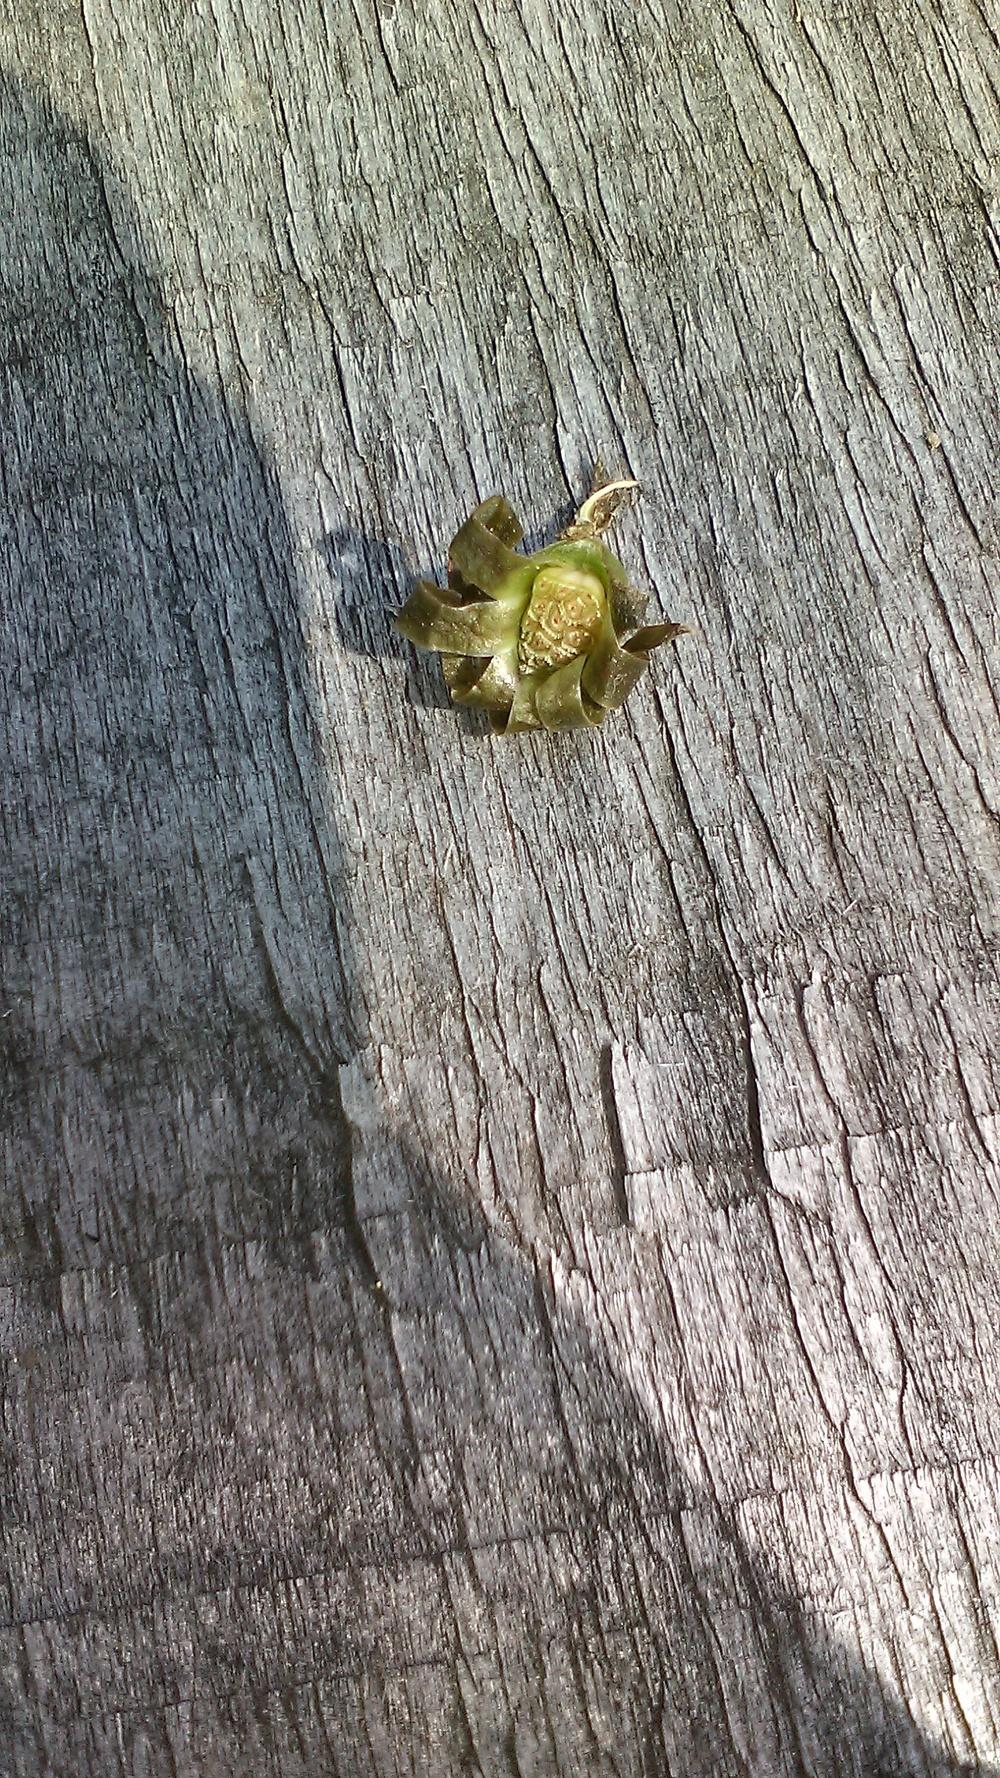 Photo of Chicory (Cichorium intybus) uploaded by m33jones2